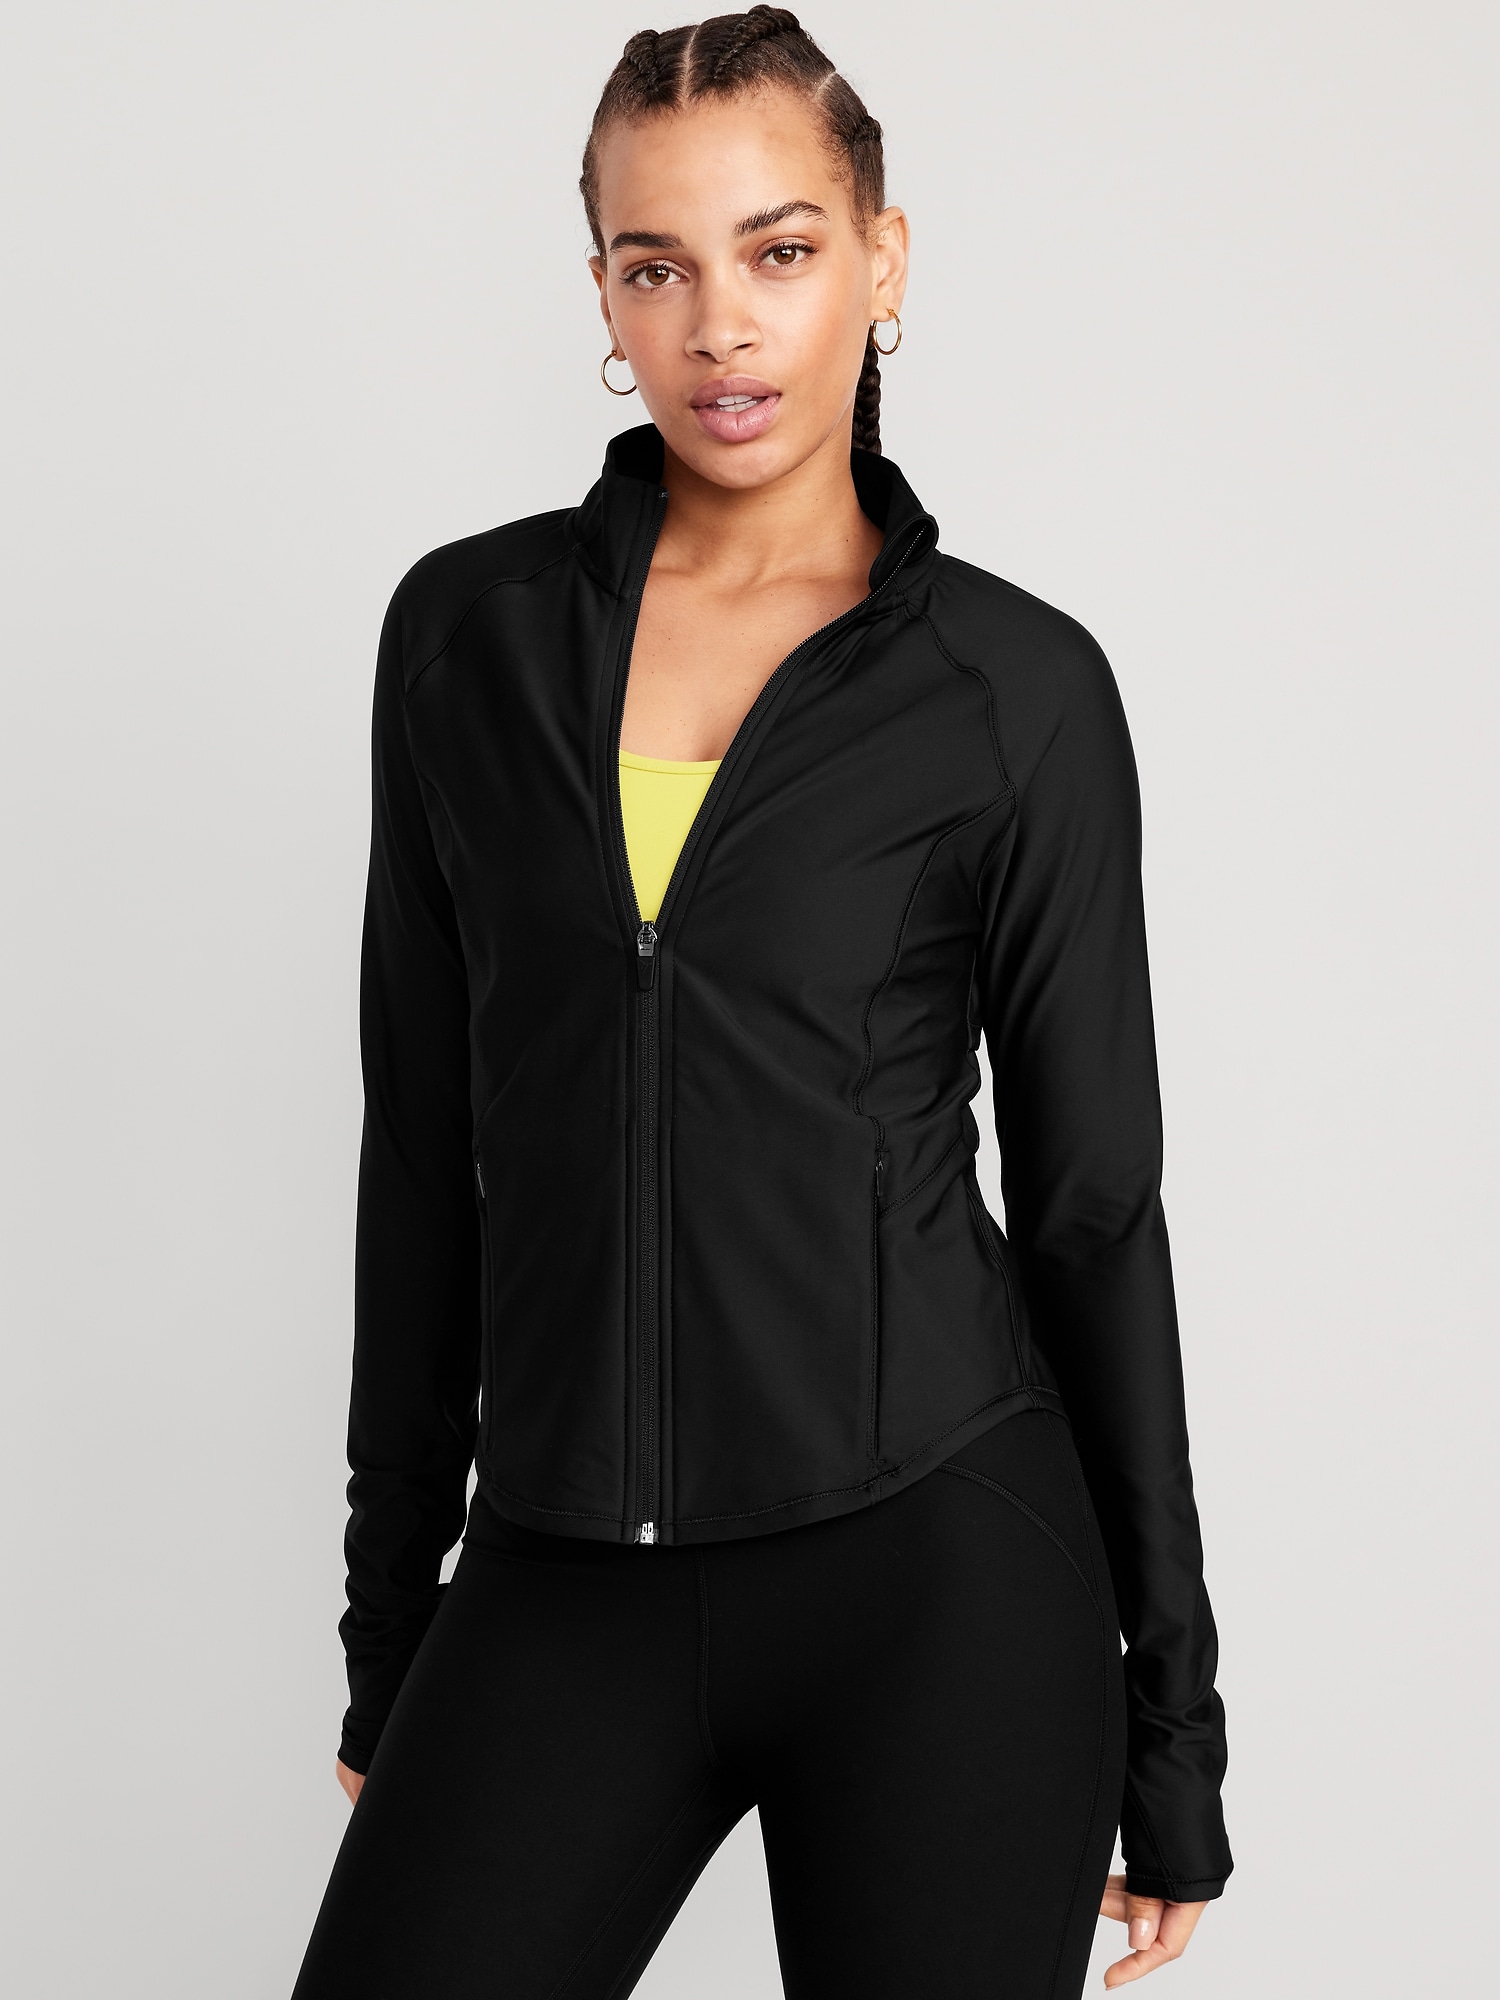 Womens jacket: casual active sport jacket